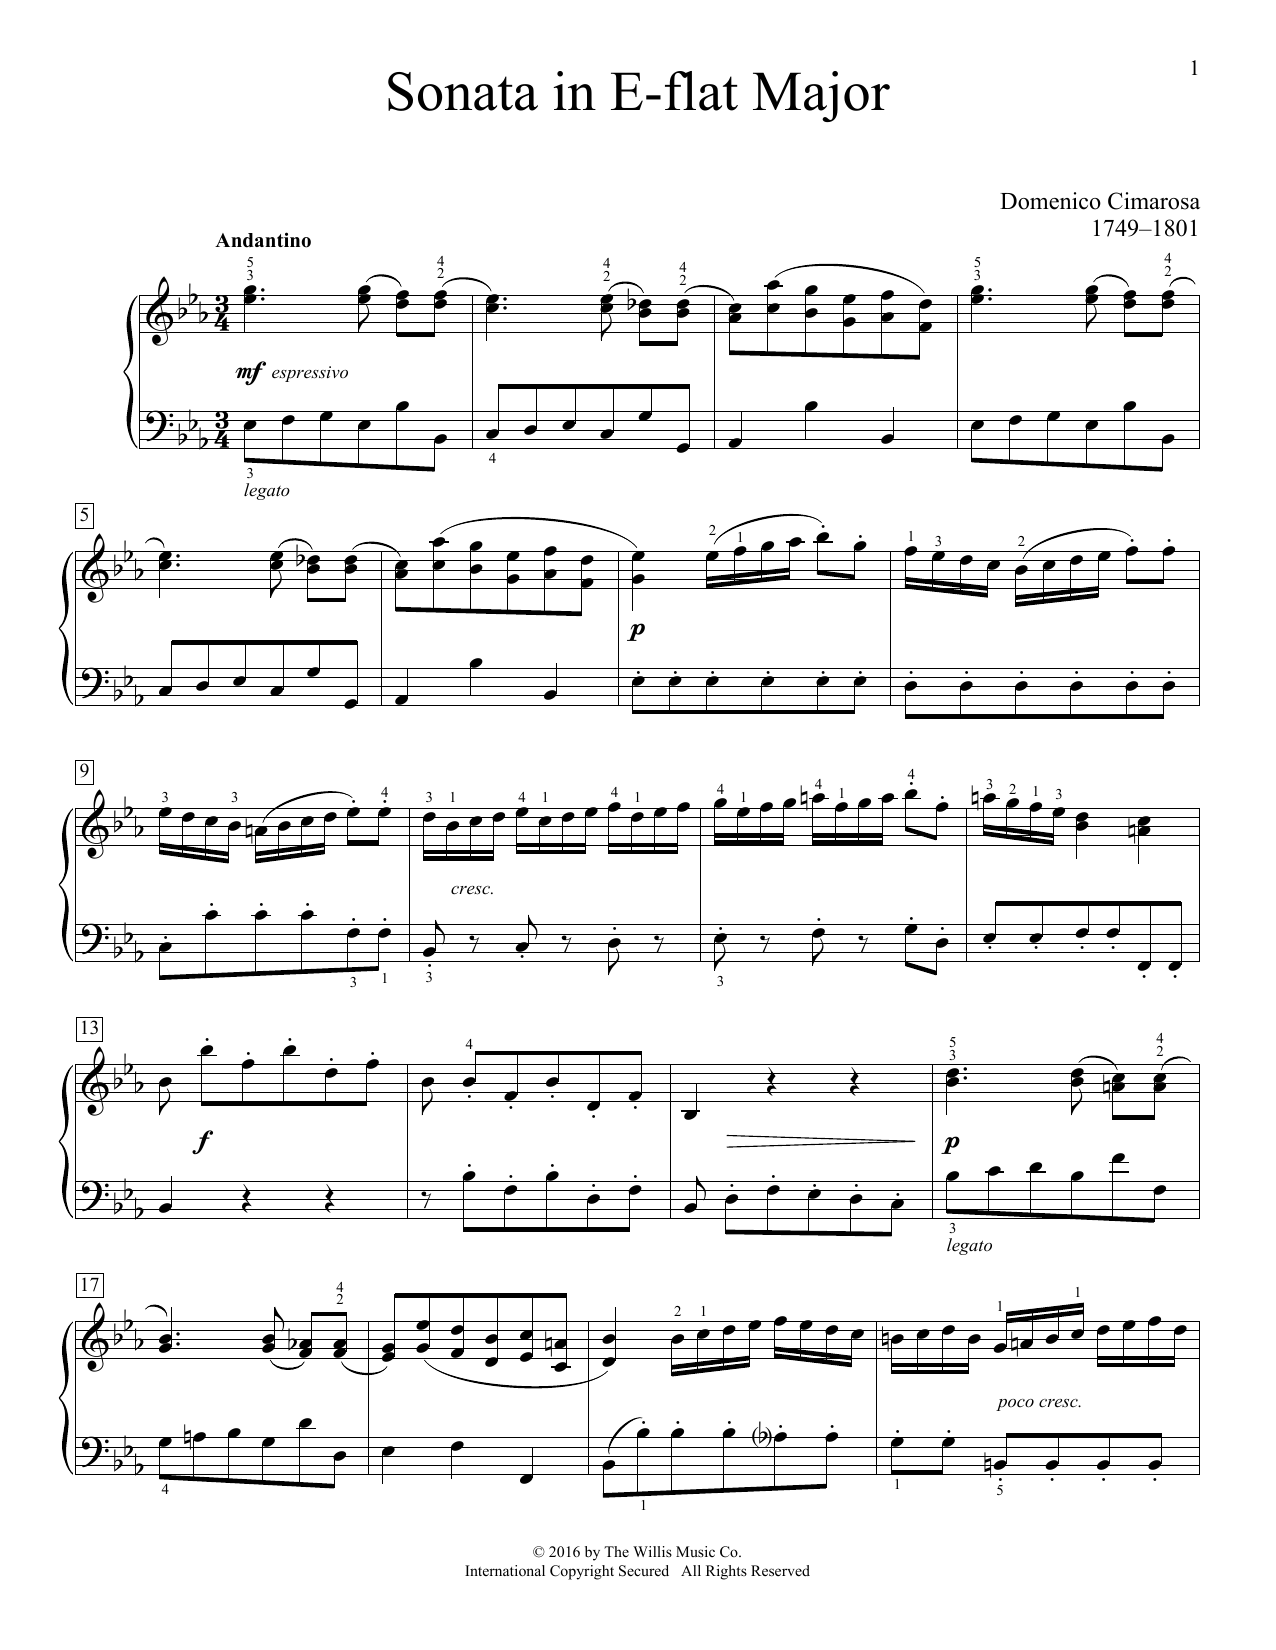 Domenico Cimarosa Sonata In E-Flat Major Sheet Music Notes & Chords for Educational Piano - Download or Print PDF